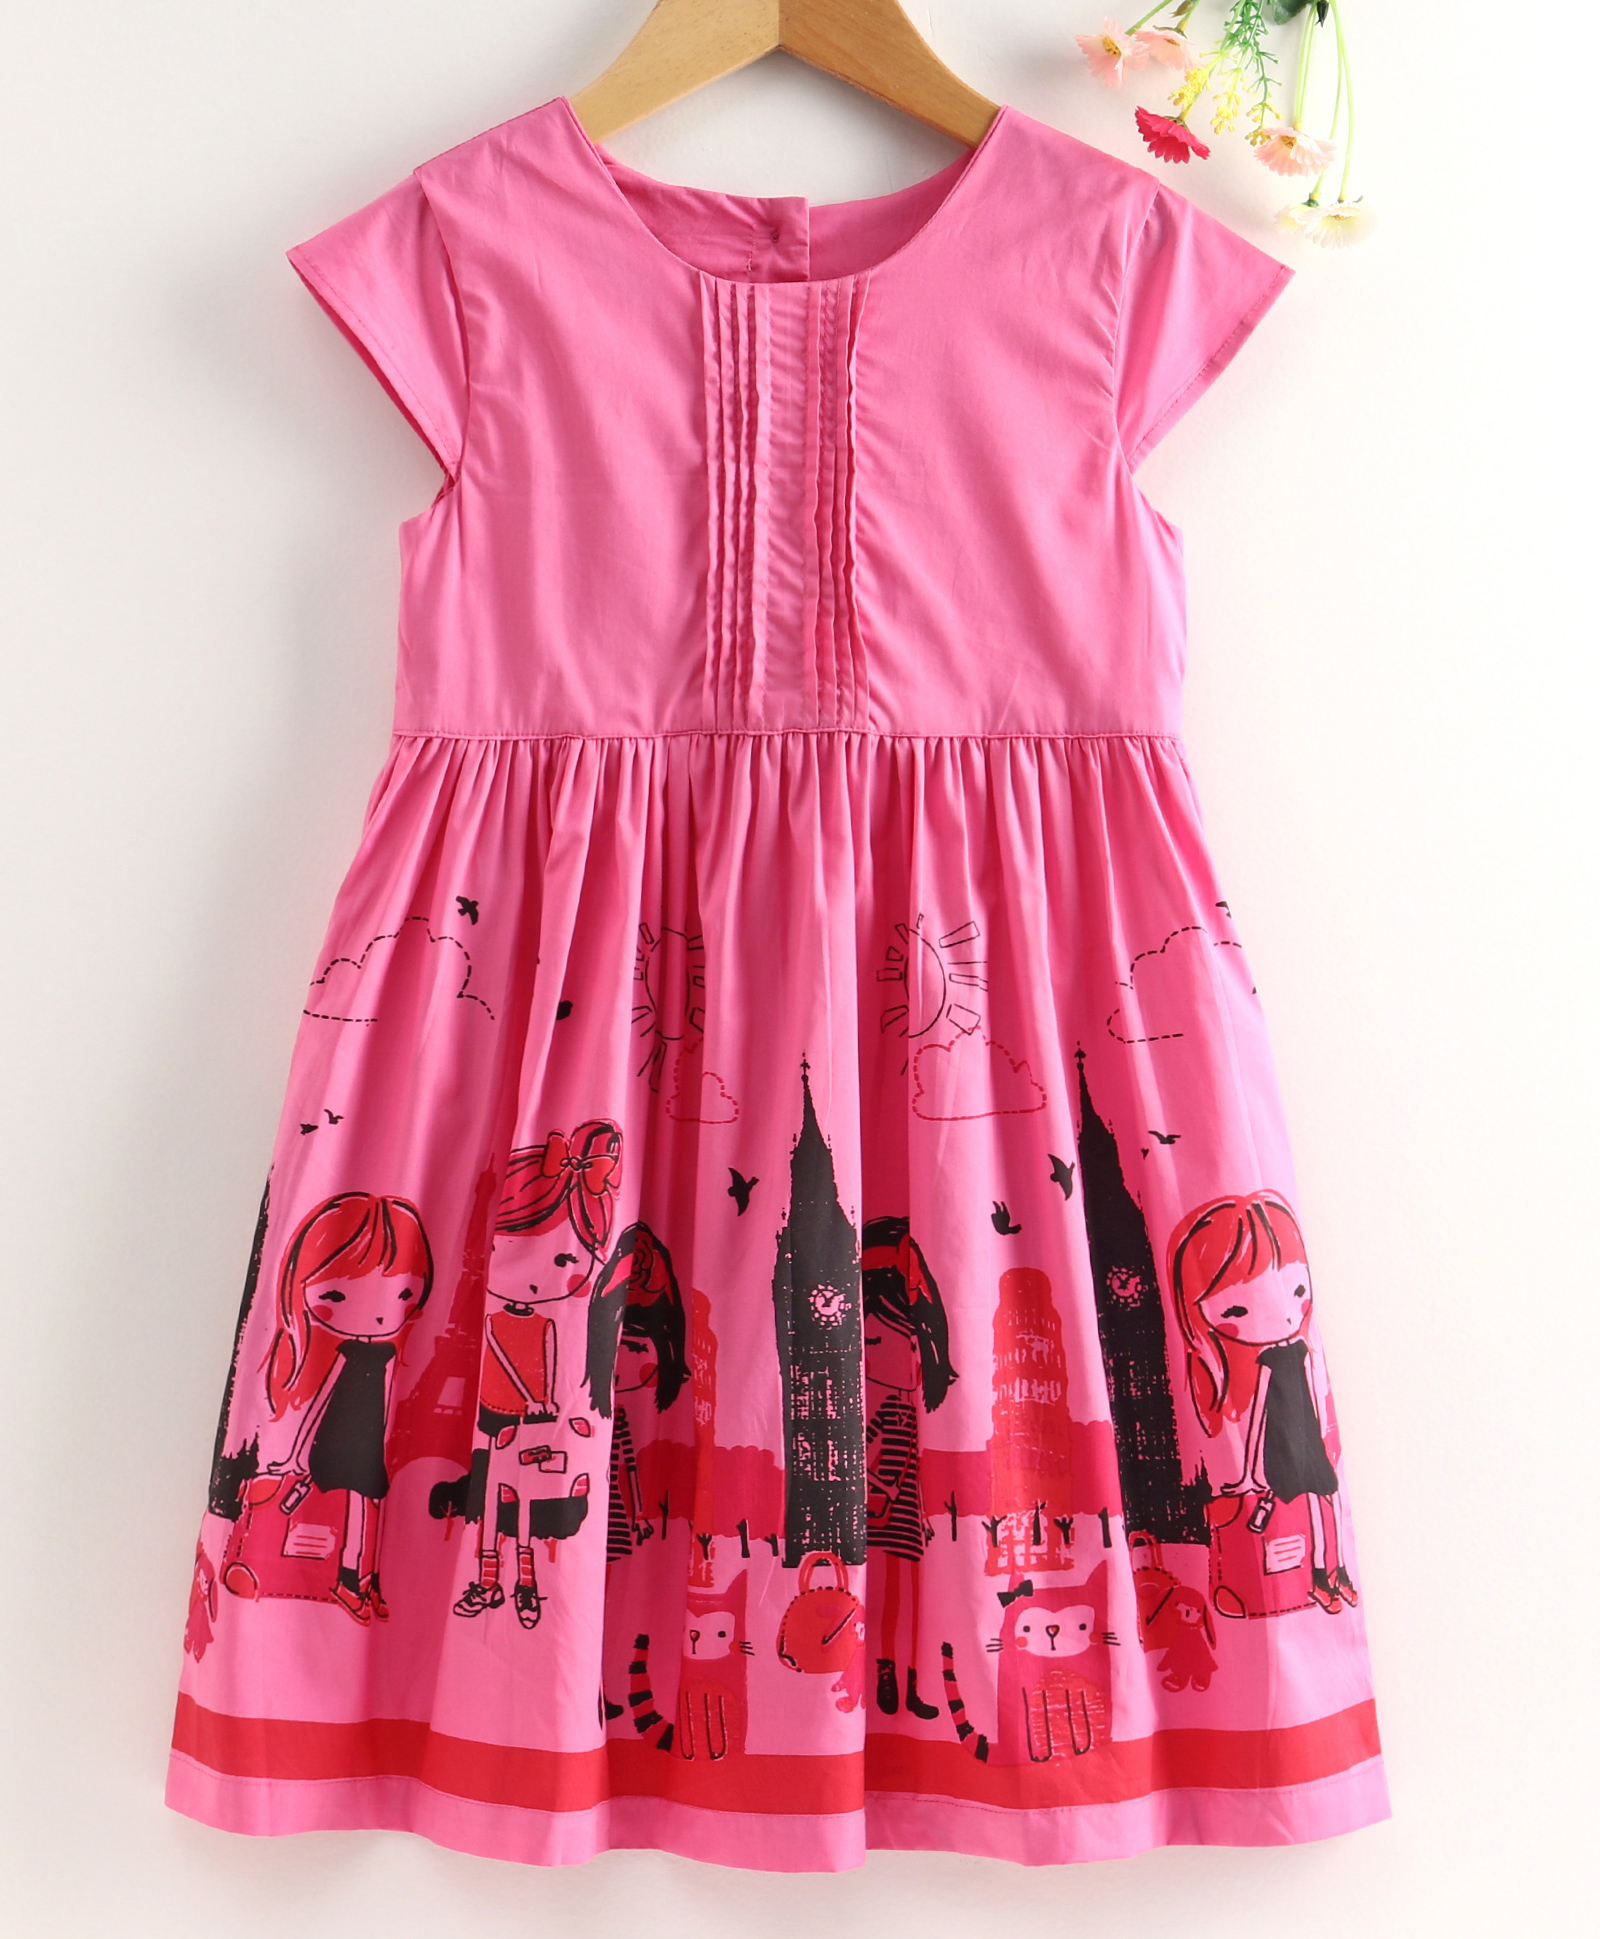 C-Knits Cotton baby dress girls printed girls frock - Pink